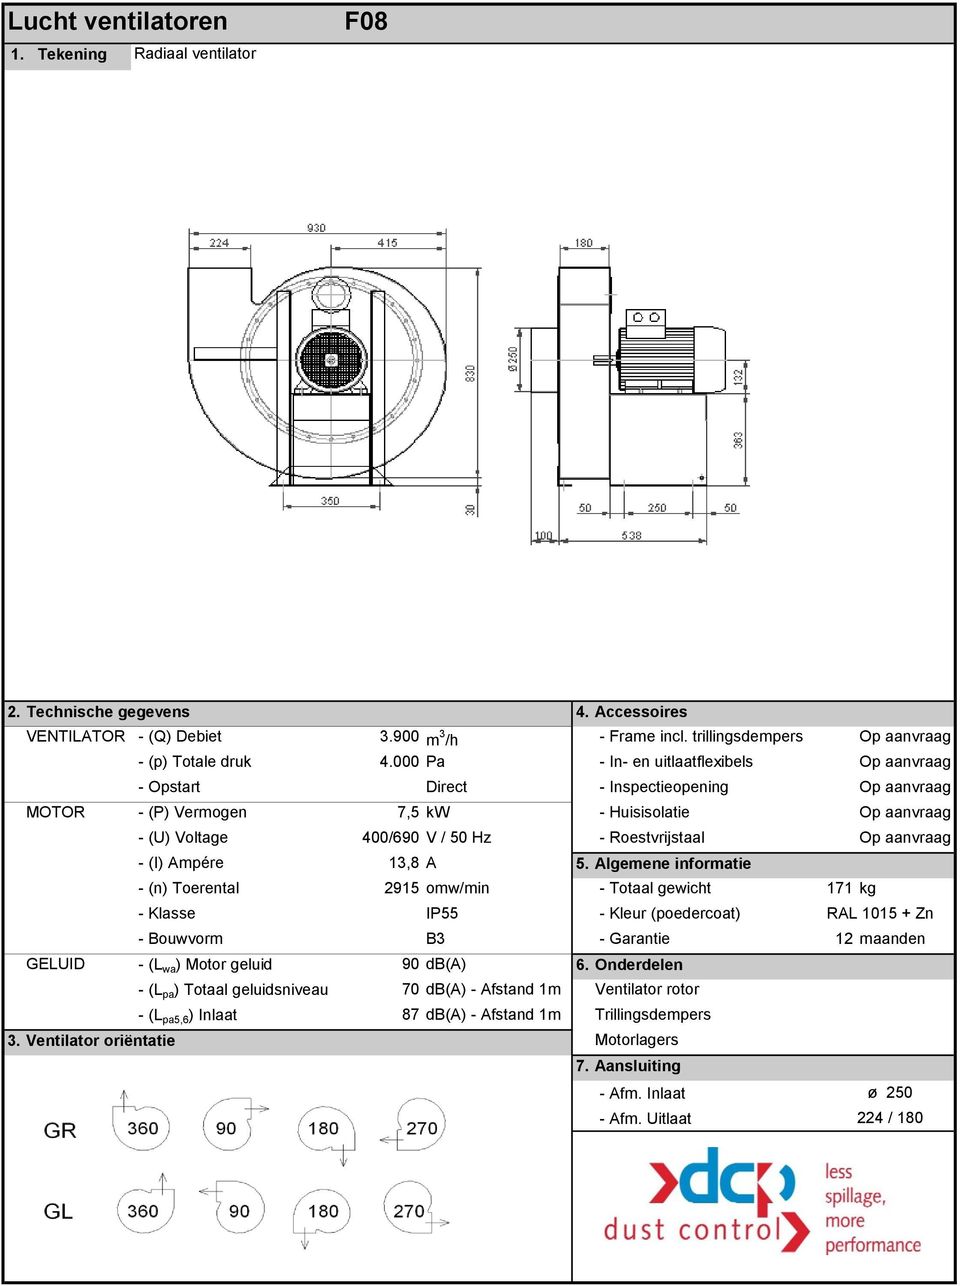 Algemene informatie - (n) Toerental 2915 omw/min - Totaal gewicht 171 kg GELUID - (L wa ) Motor geluid 90 db(a) 6.